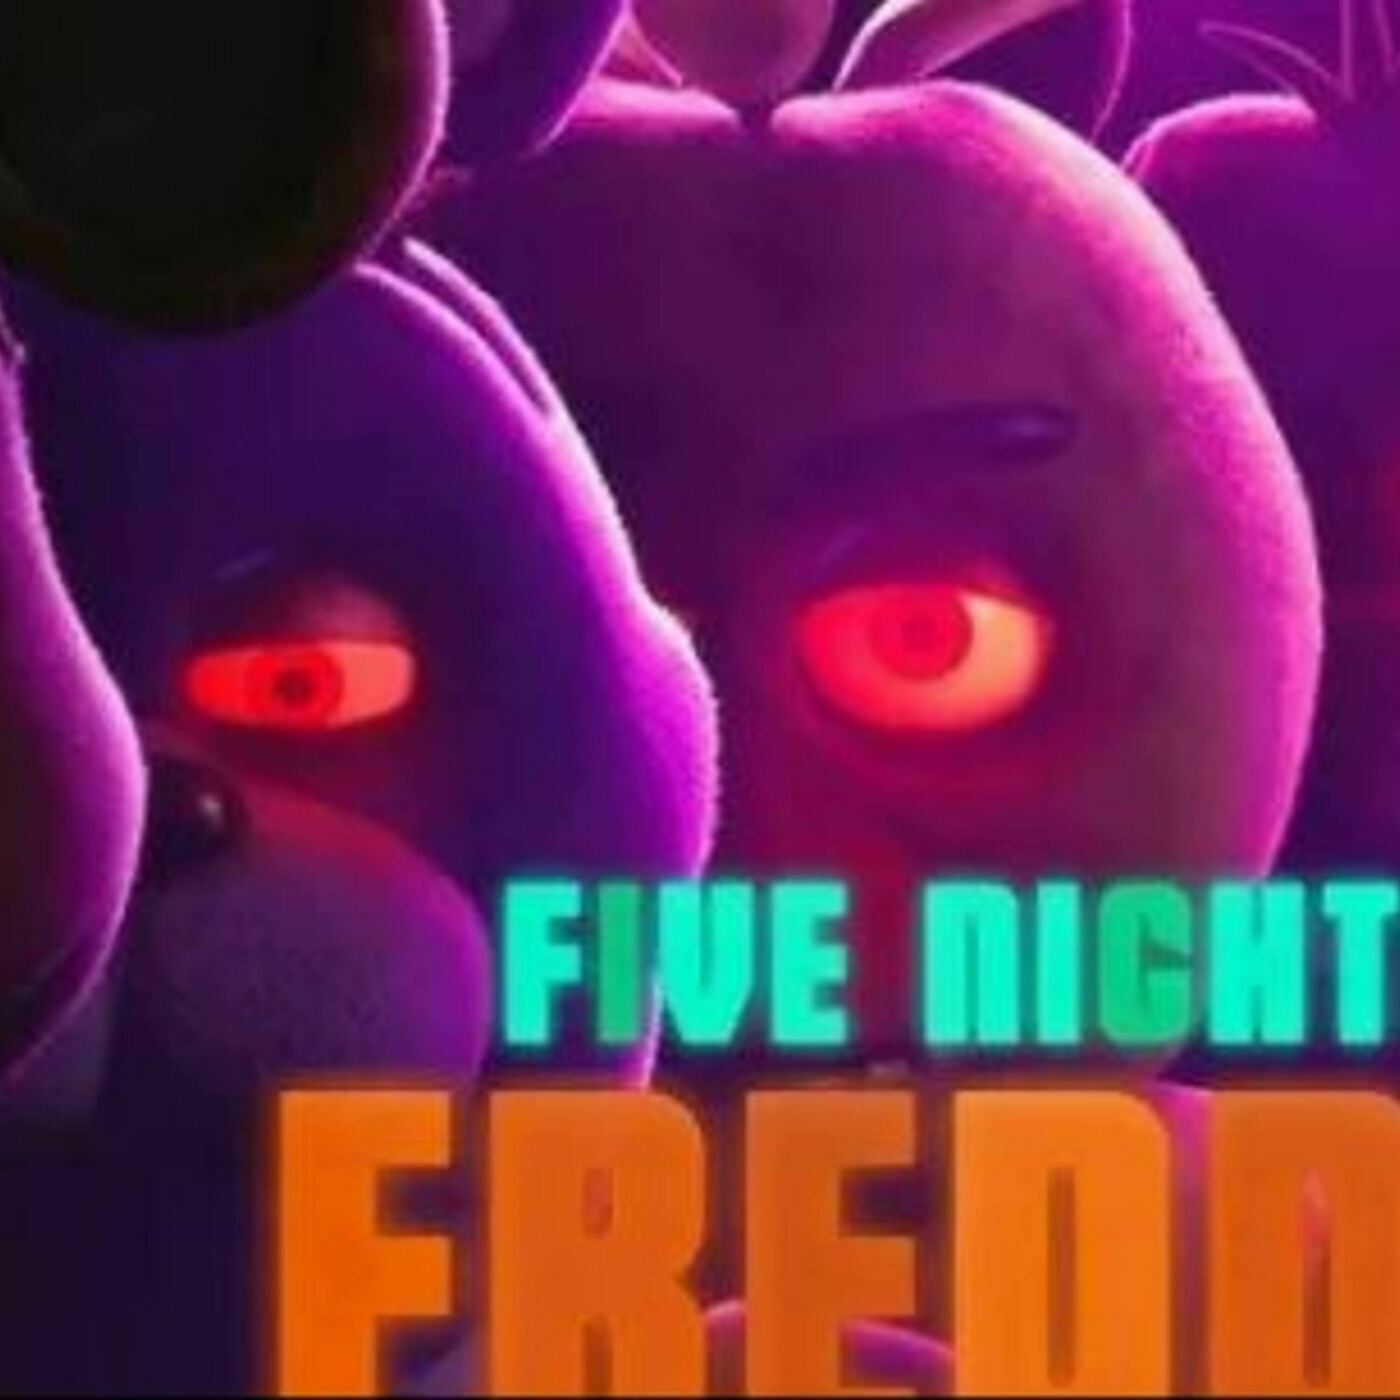 FNaF 4 PS5 Gameplay running at 1080P60 [Five Nights at Freddy's 4] 